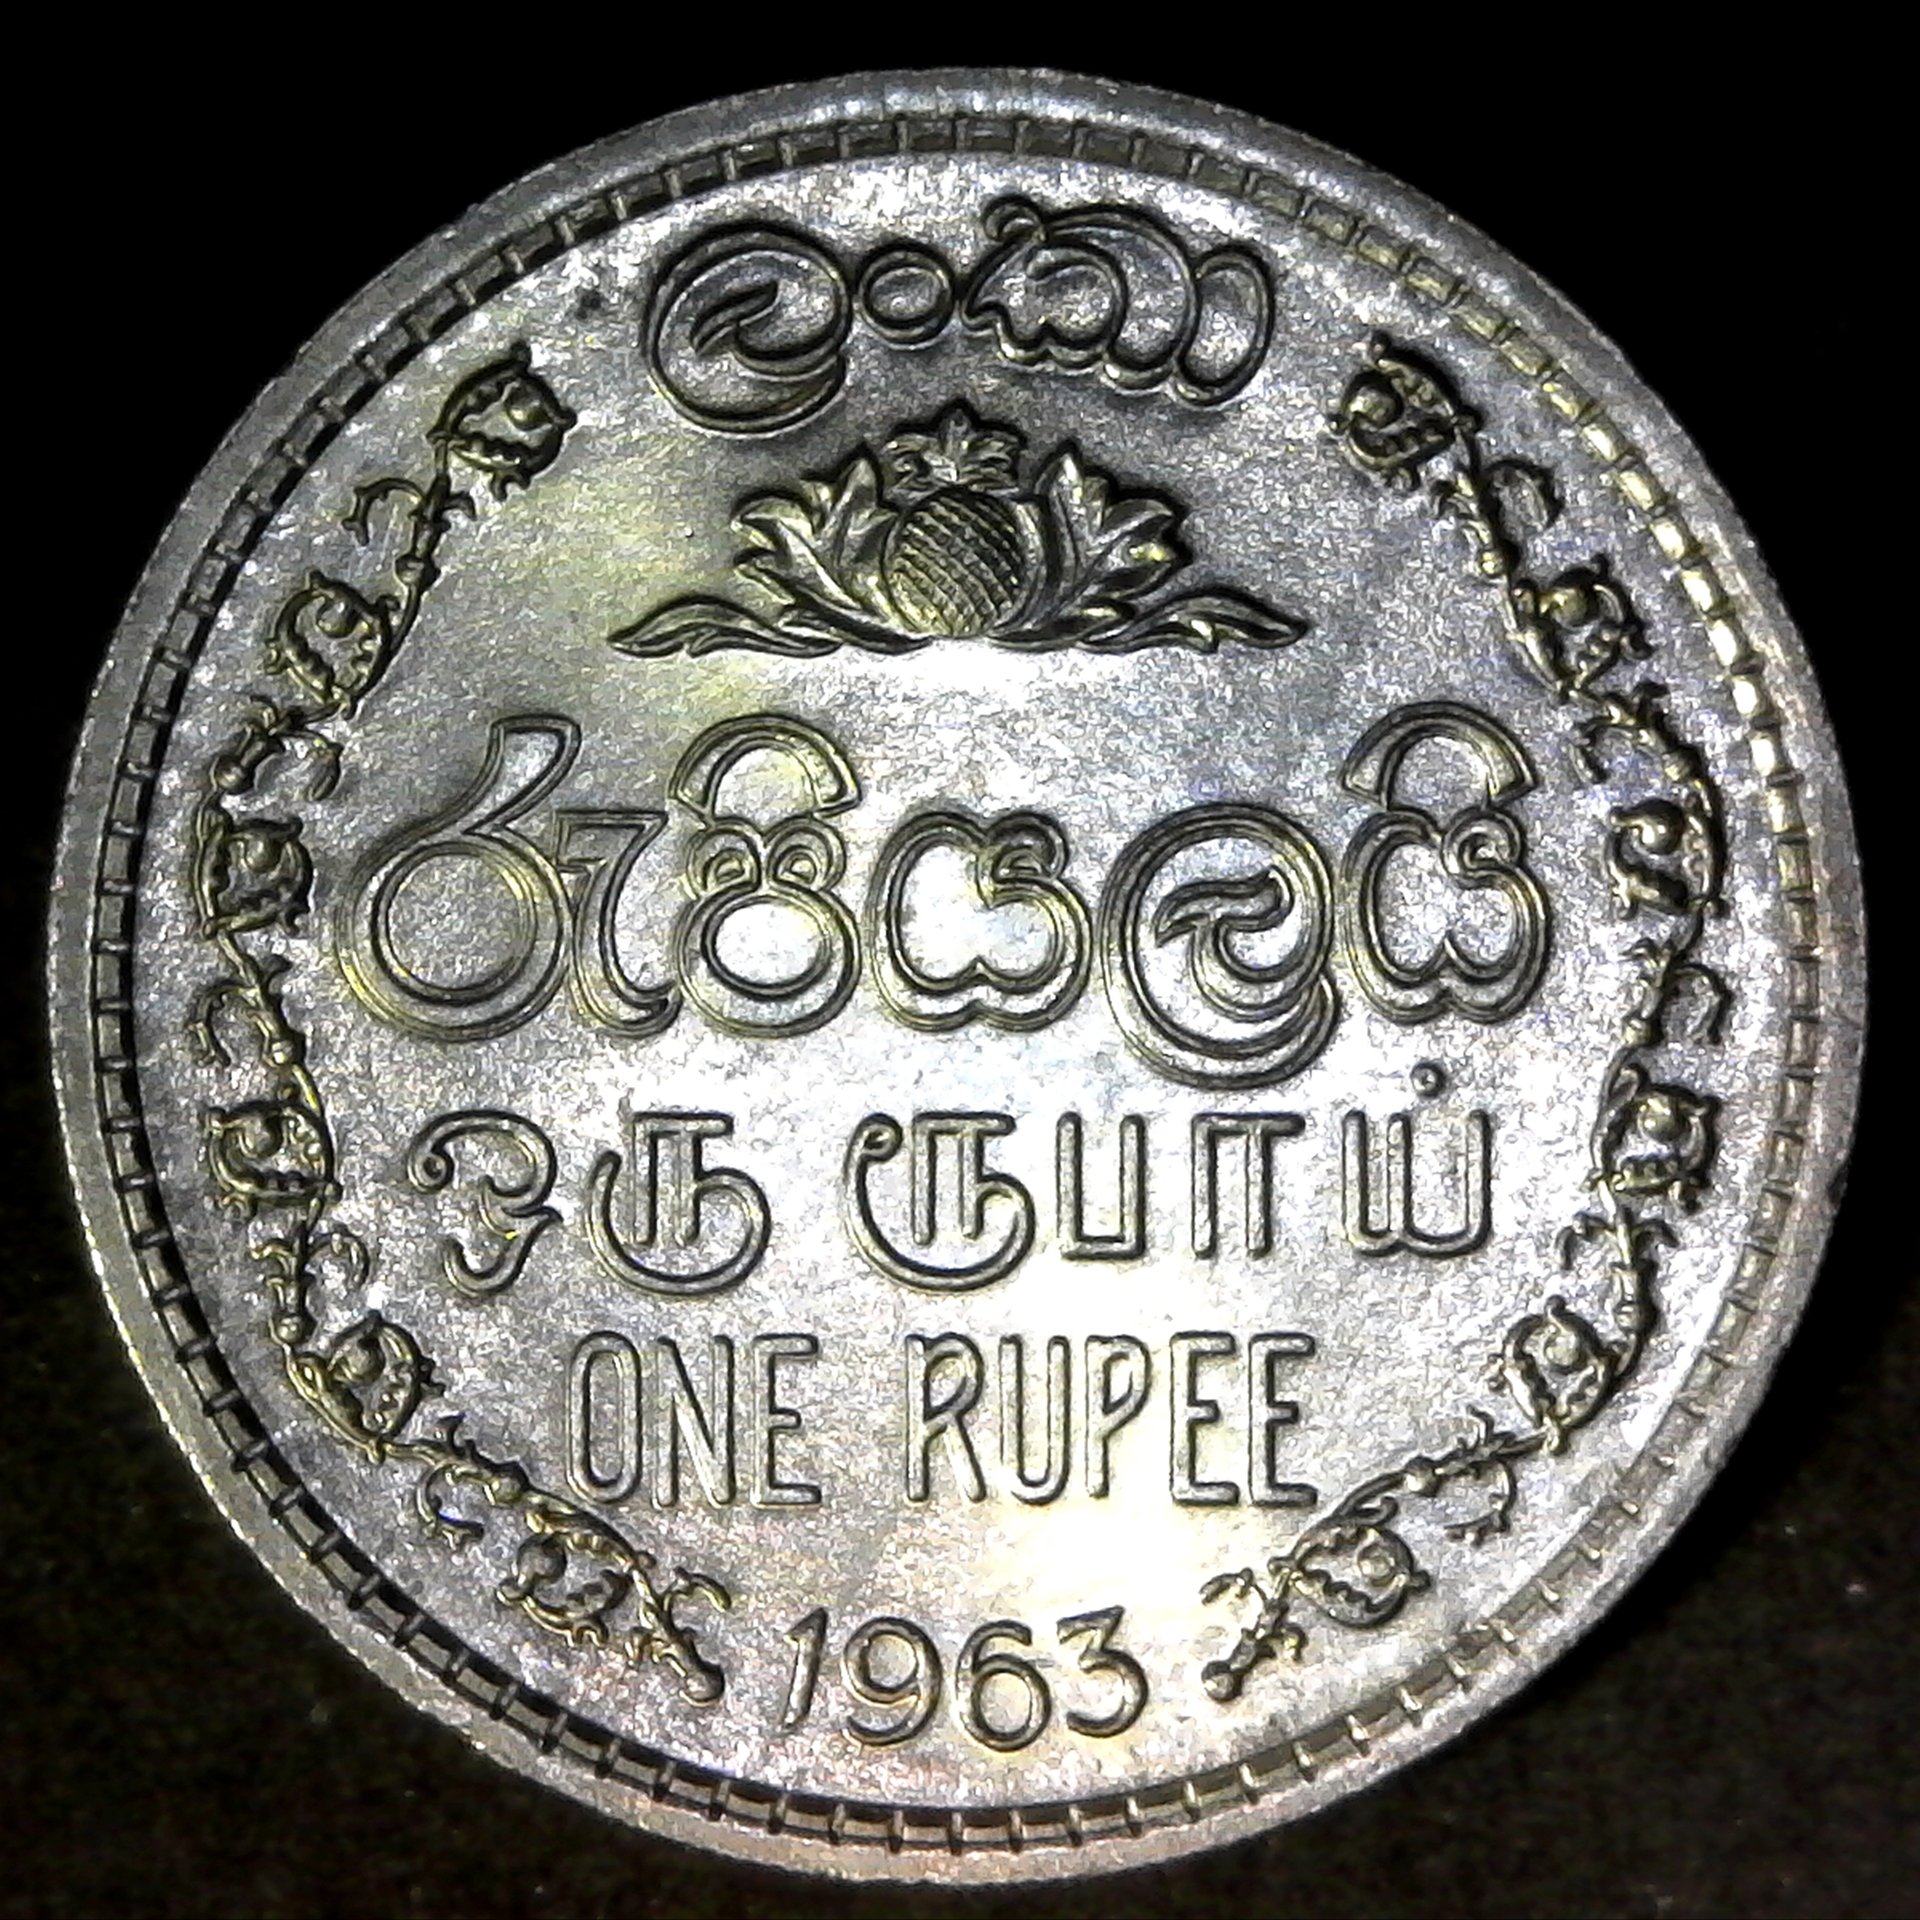 Ceylon Rupee 1963 Rupee rev.jpg